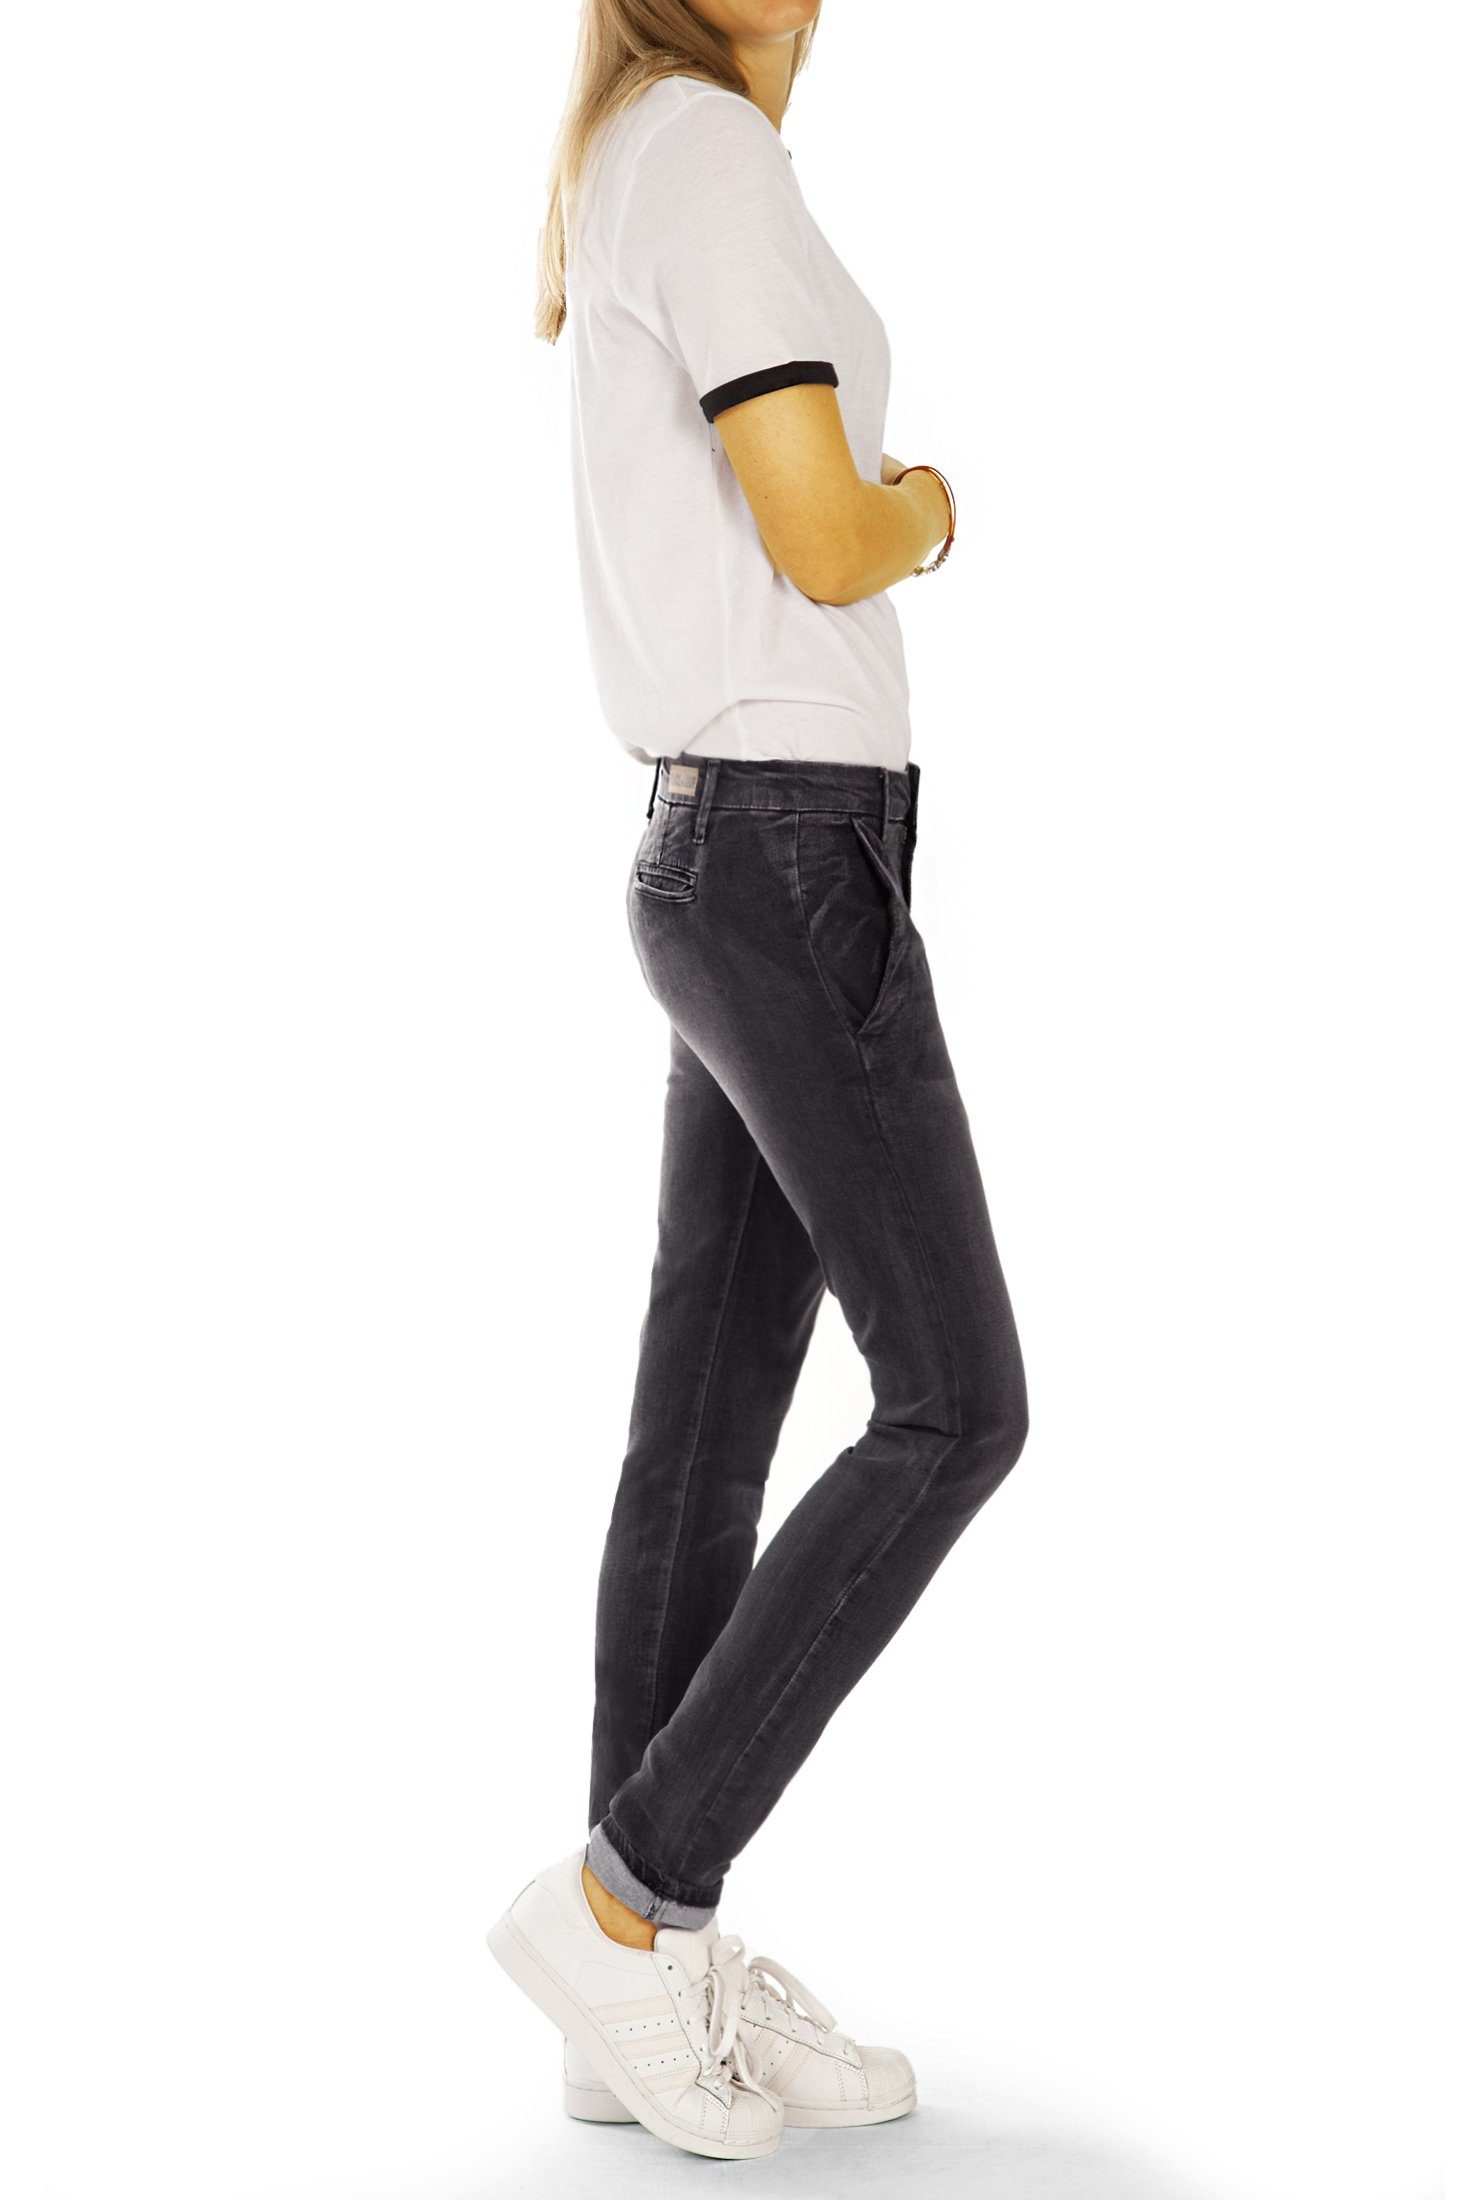 Hüfthosen in Damen Chino grau - Unifarben Stretch, - Hüftige j10m-3 be mit Hose styled Chinohose Stoffhosen